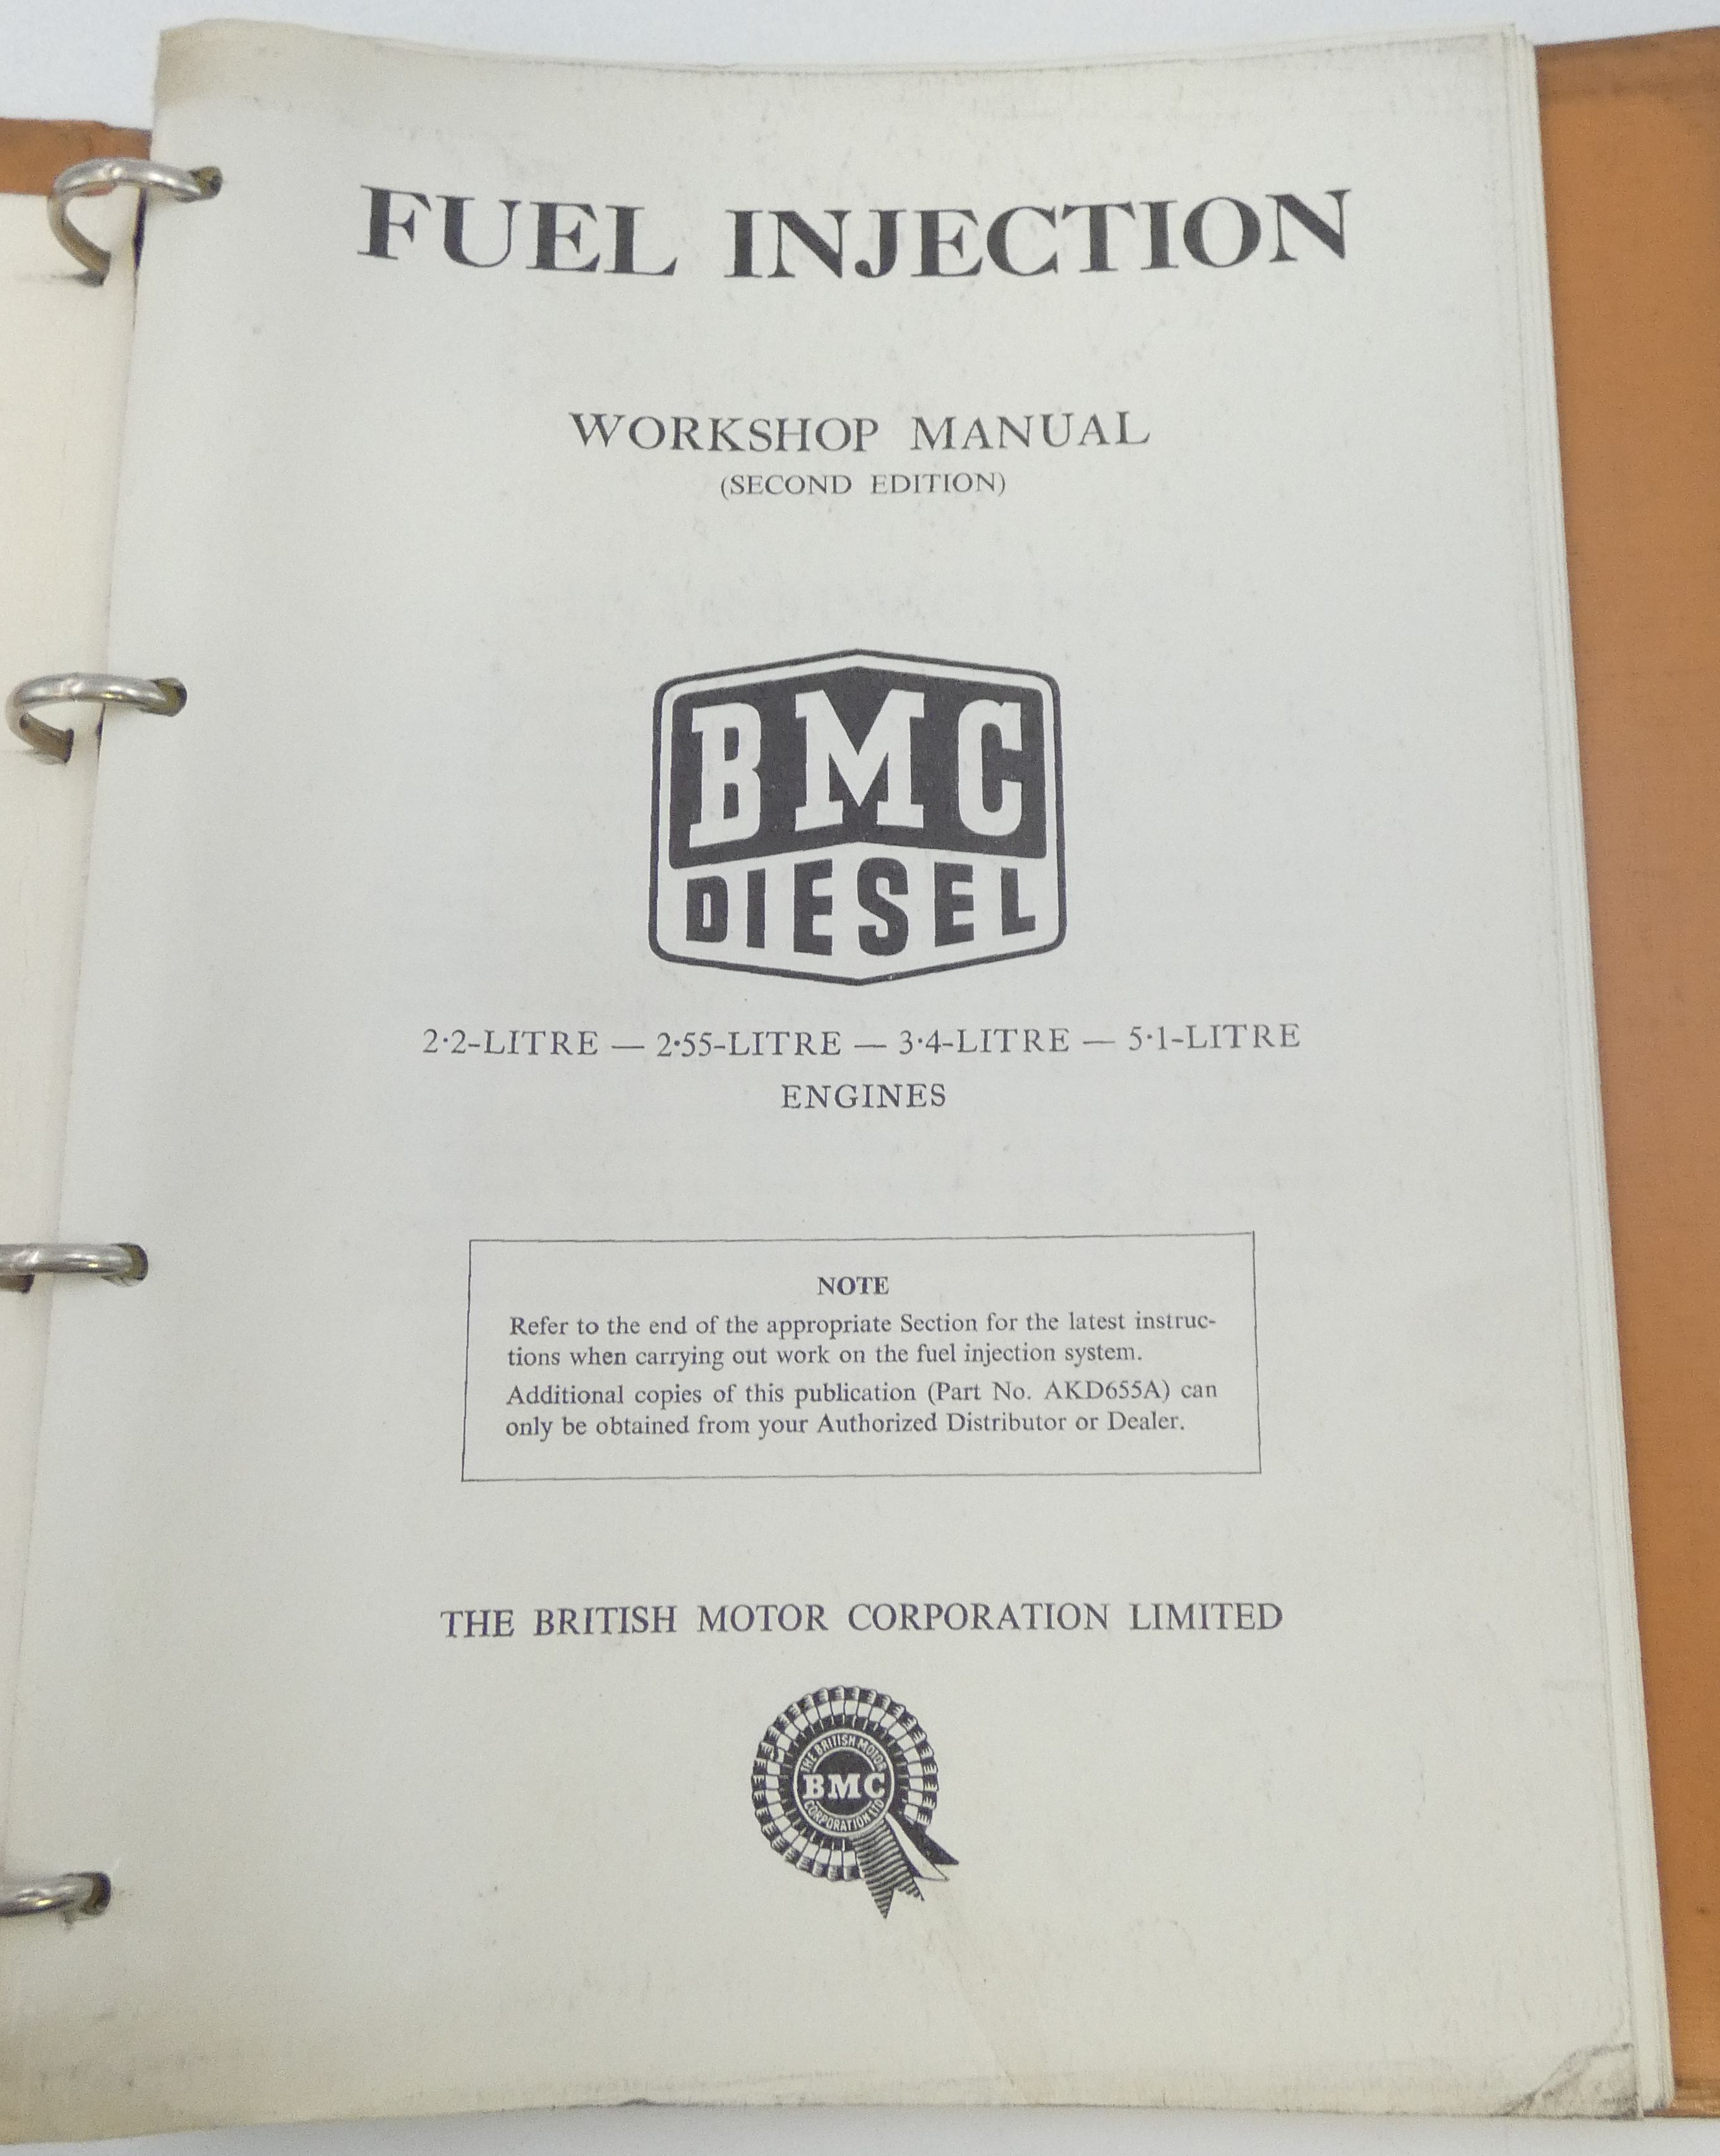 BMC Diesel fuel injection workshop manual